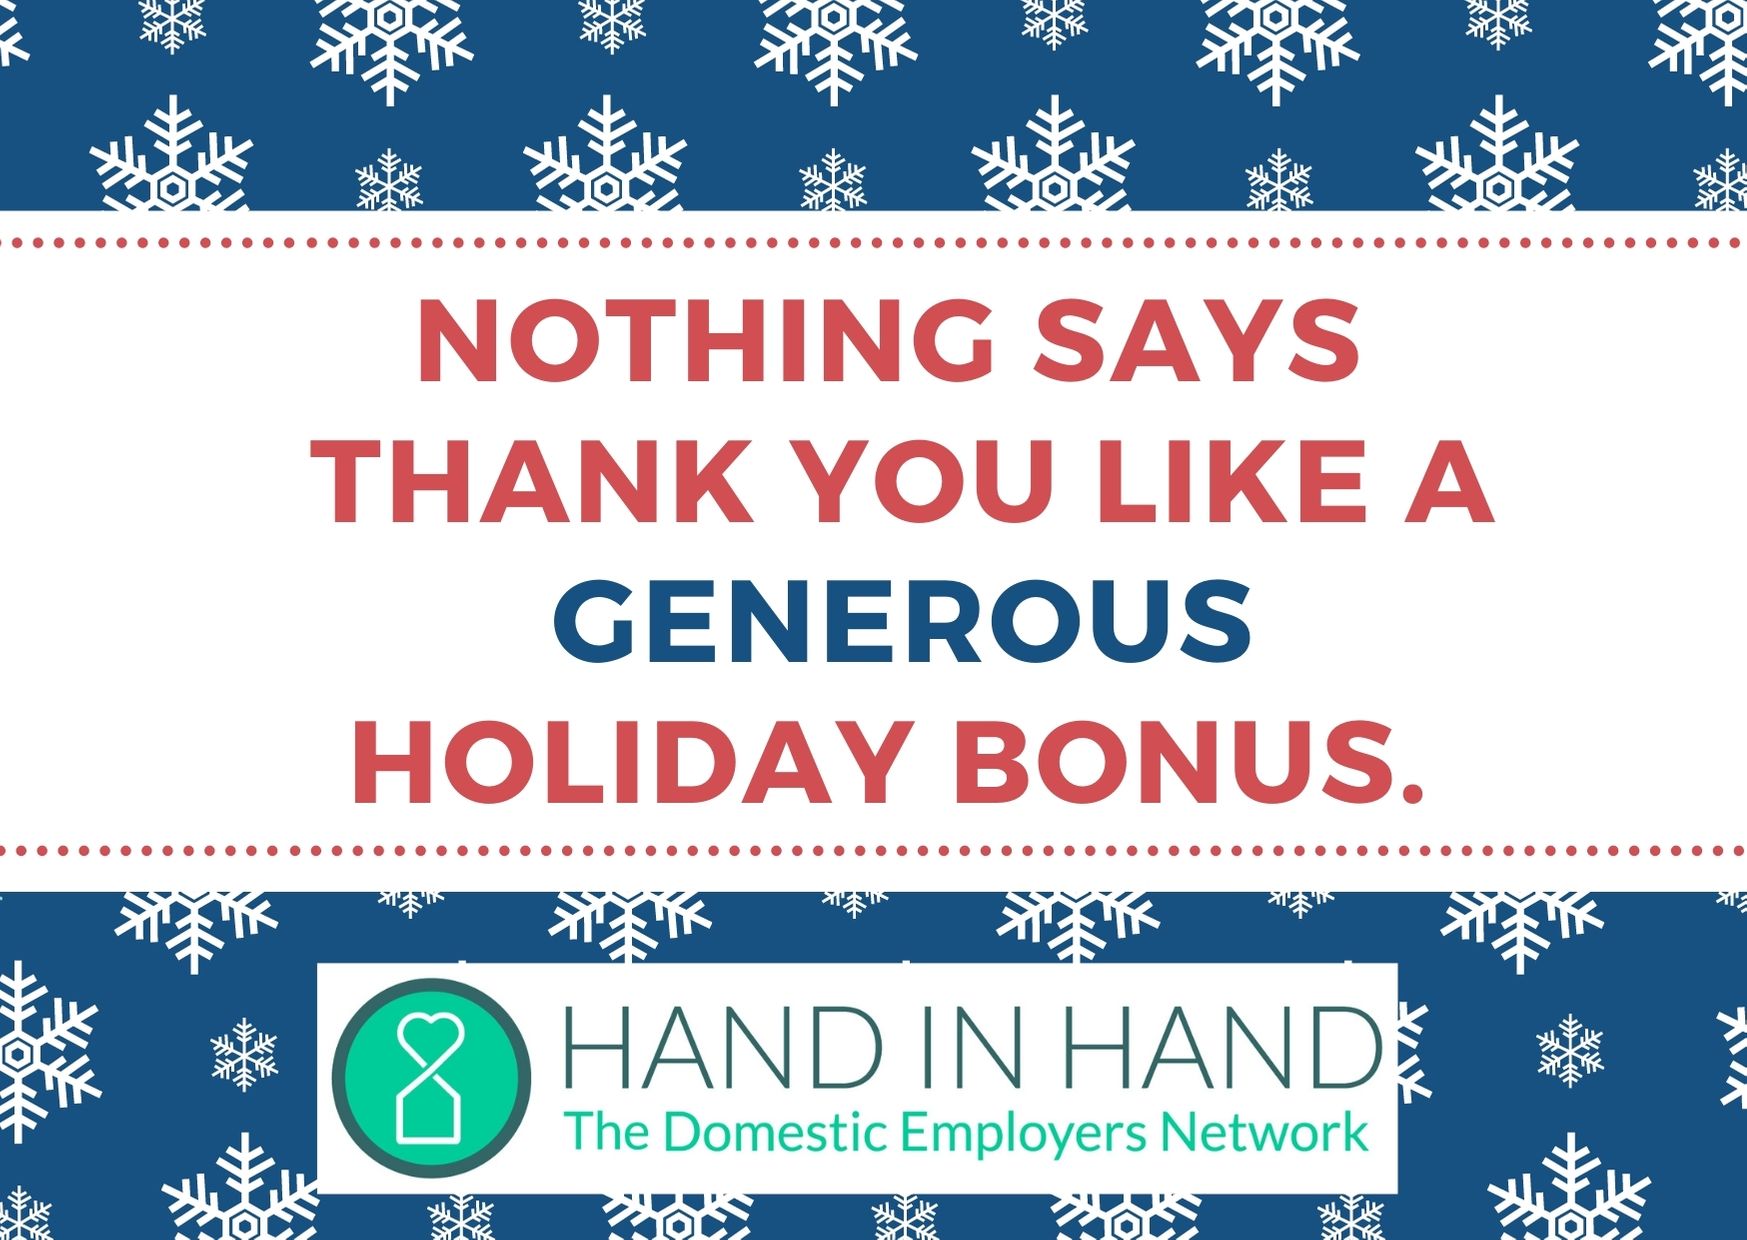 holiday bonus for employees